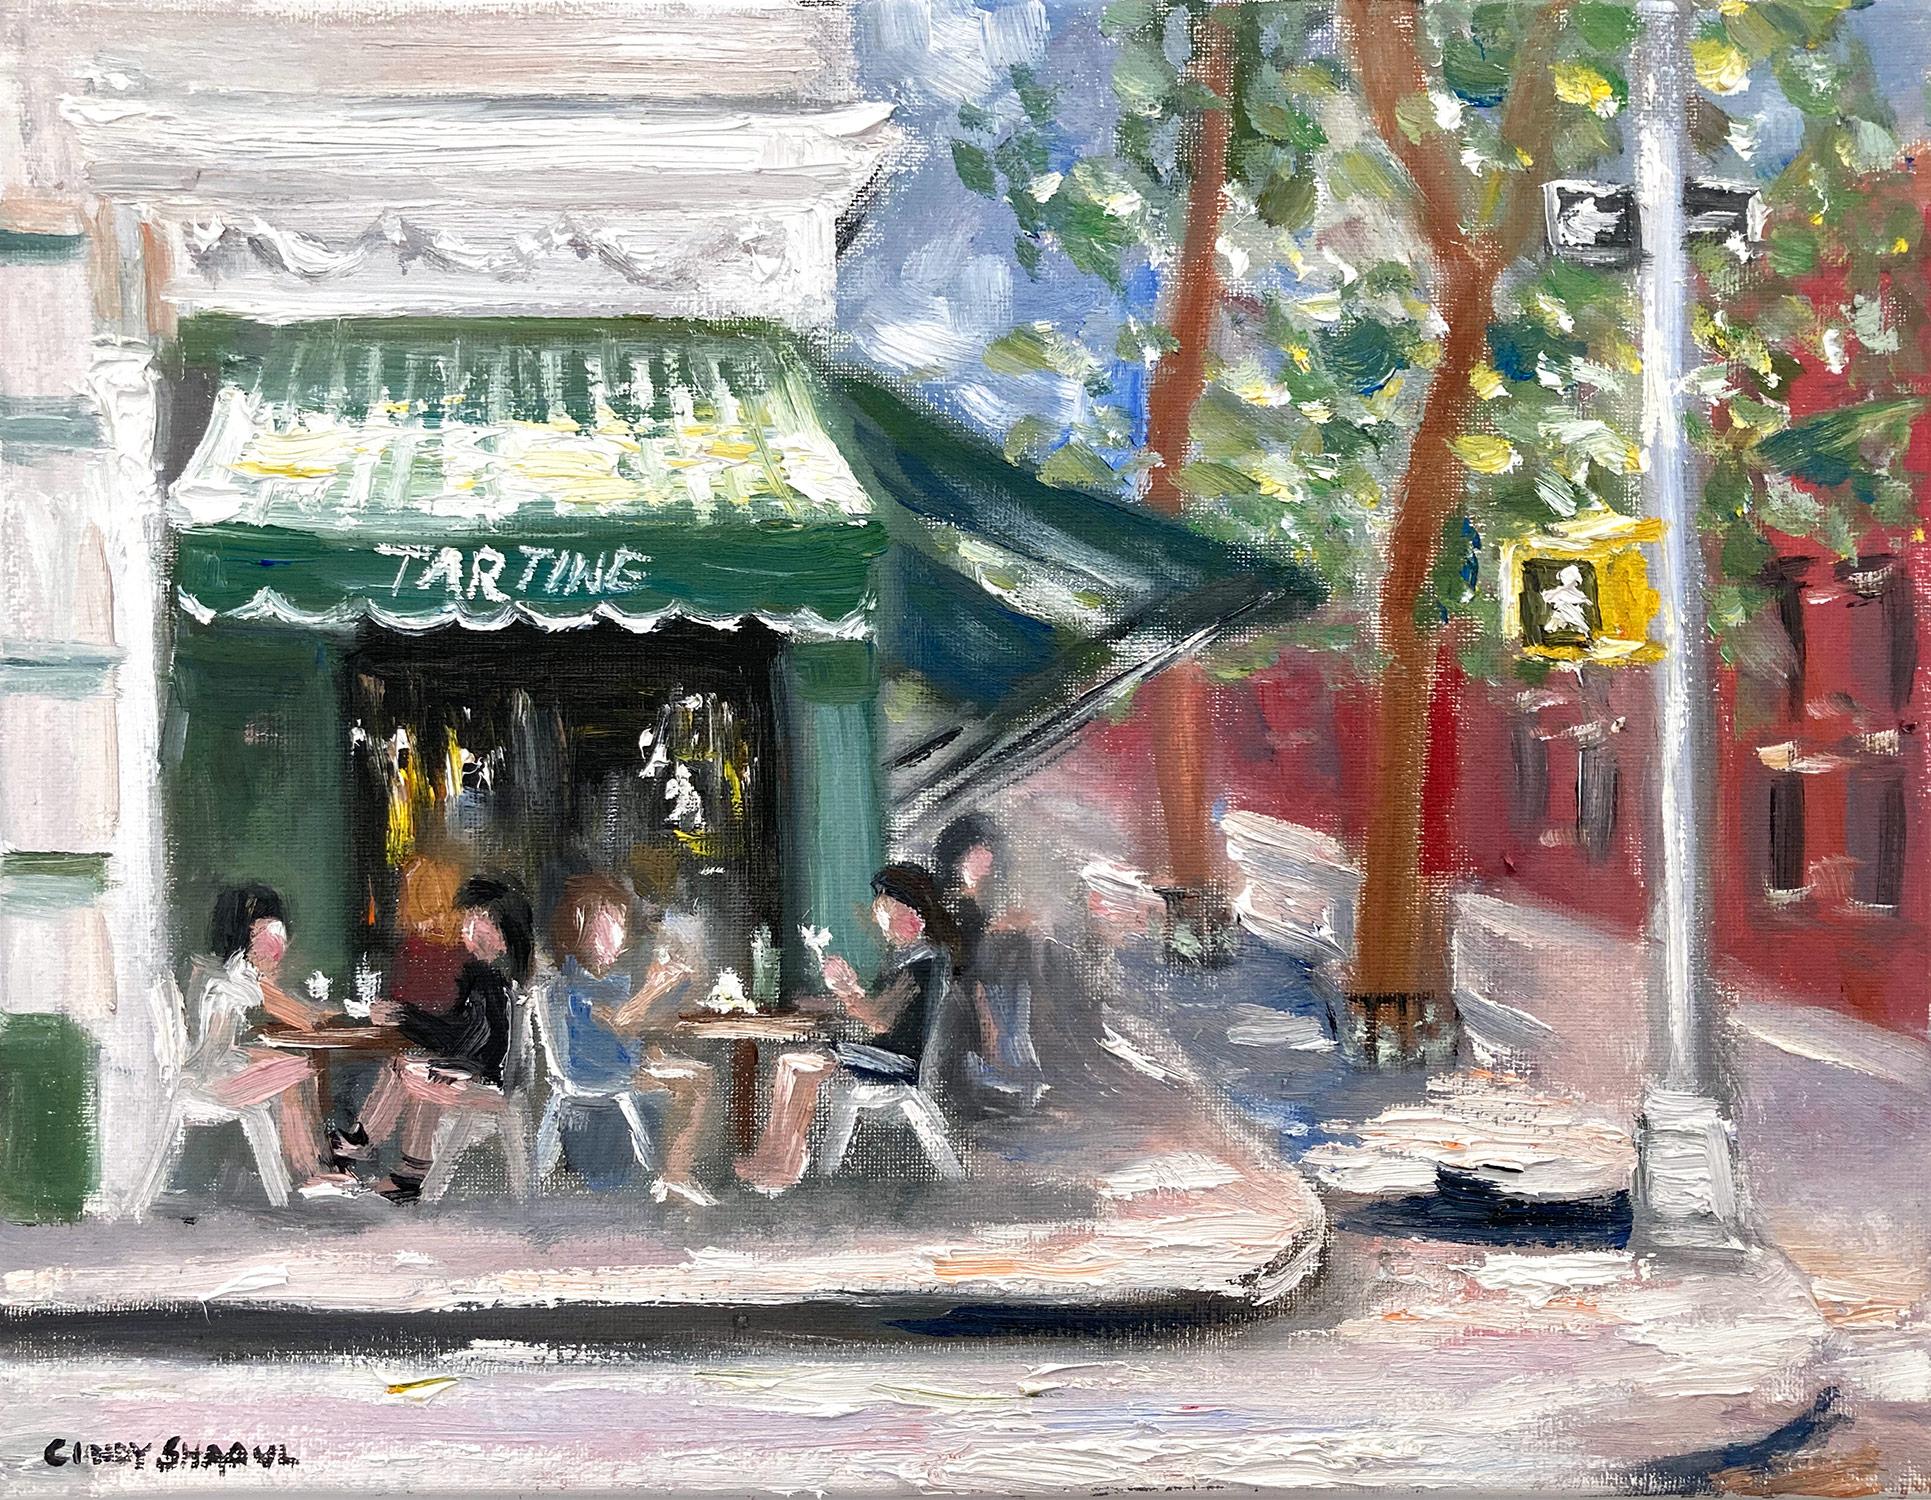 Cindy Shaoul Landscape Painting - "Brunch at Tartine" West Village Restaurant Street Scene in New York City